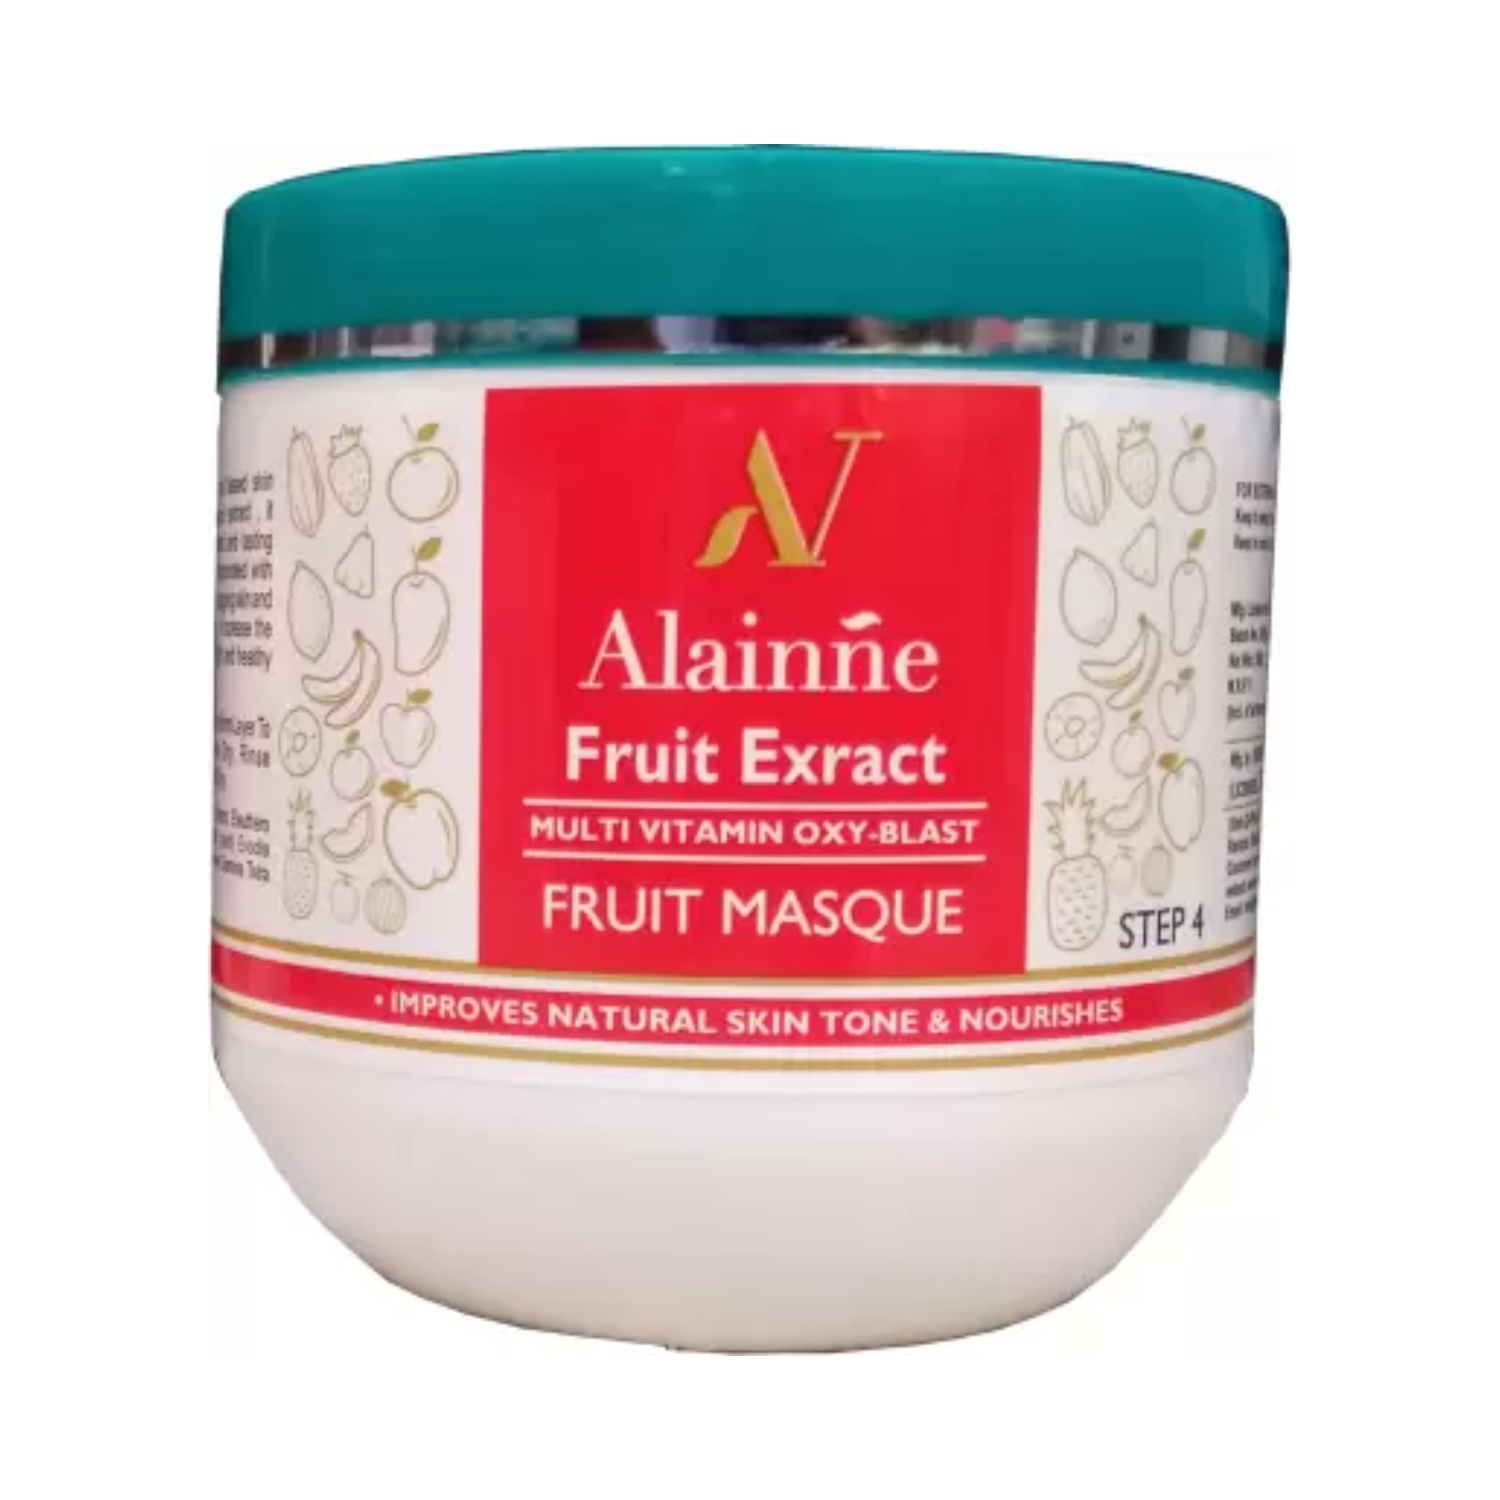 Alainne | Alainne Fruit Extract Multi Vitamin Oxy Blast Step-4 Masque - (500g)